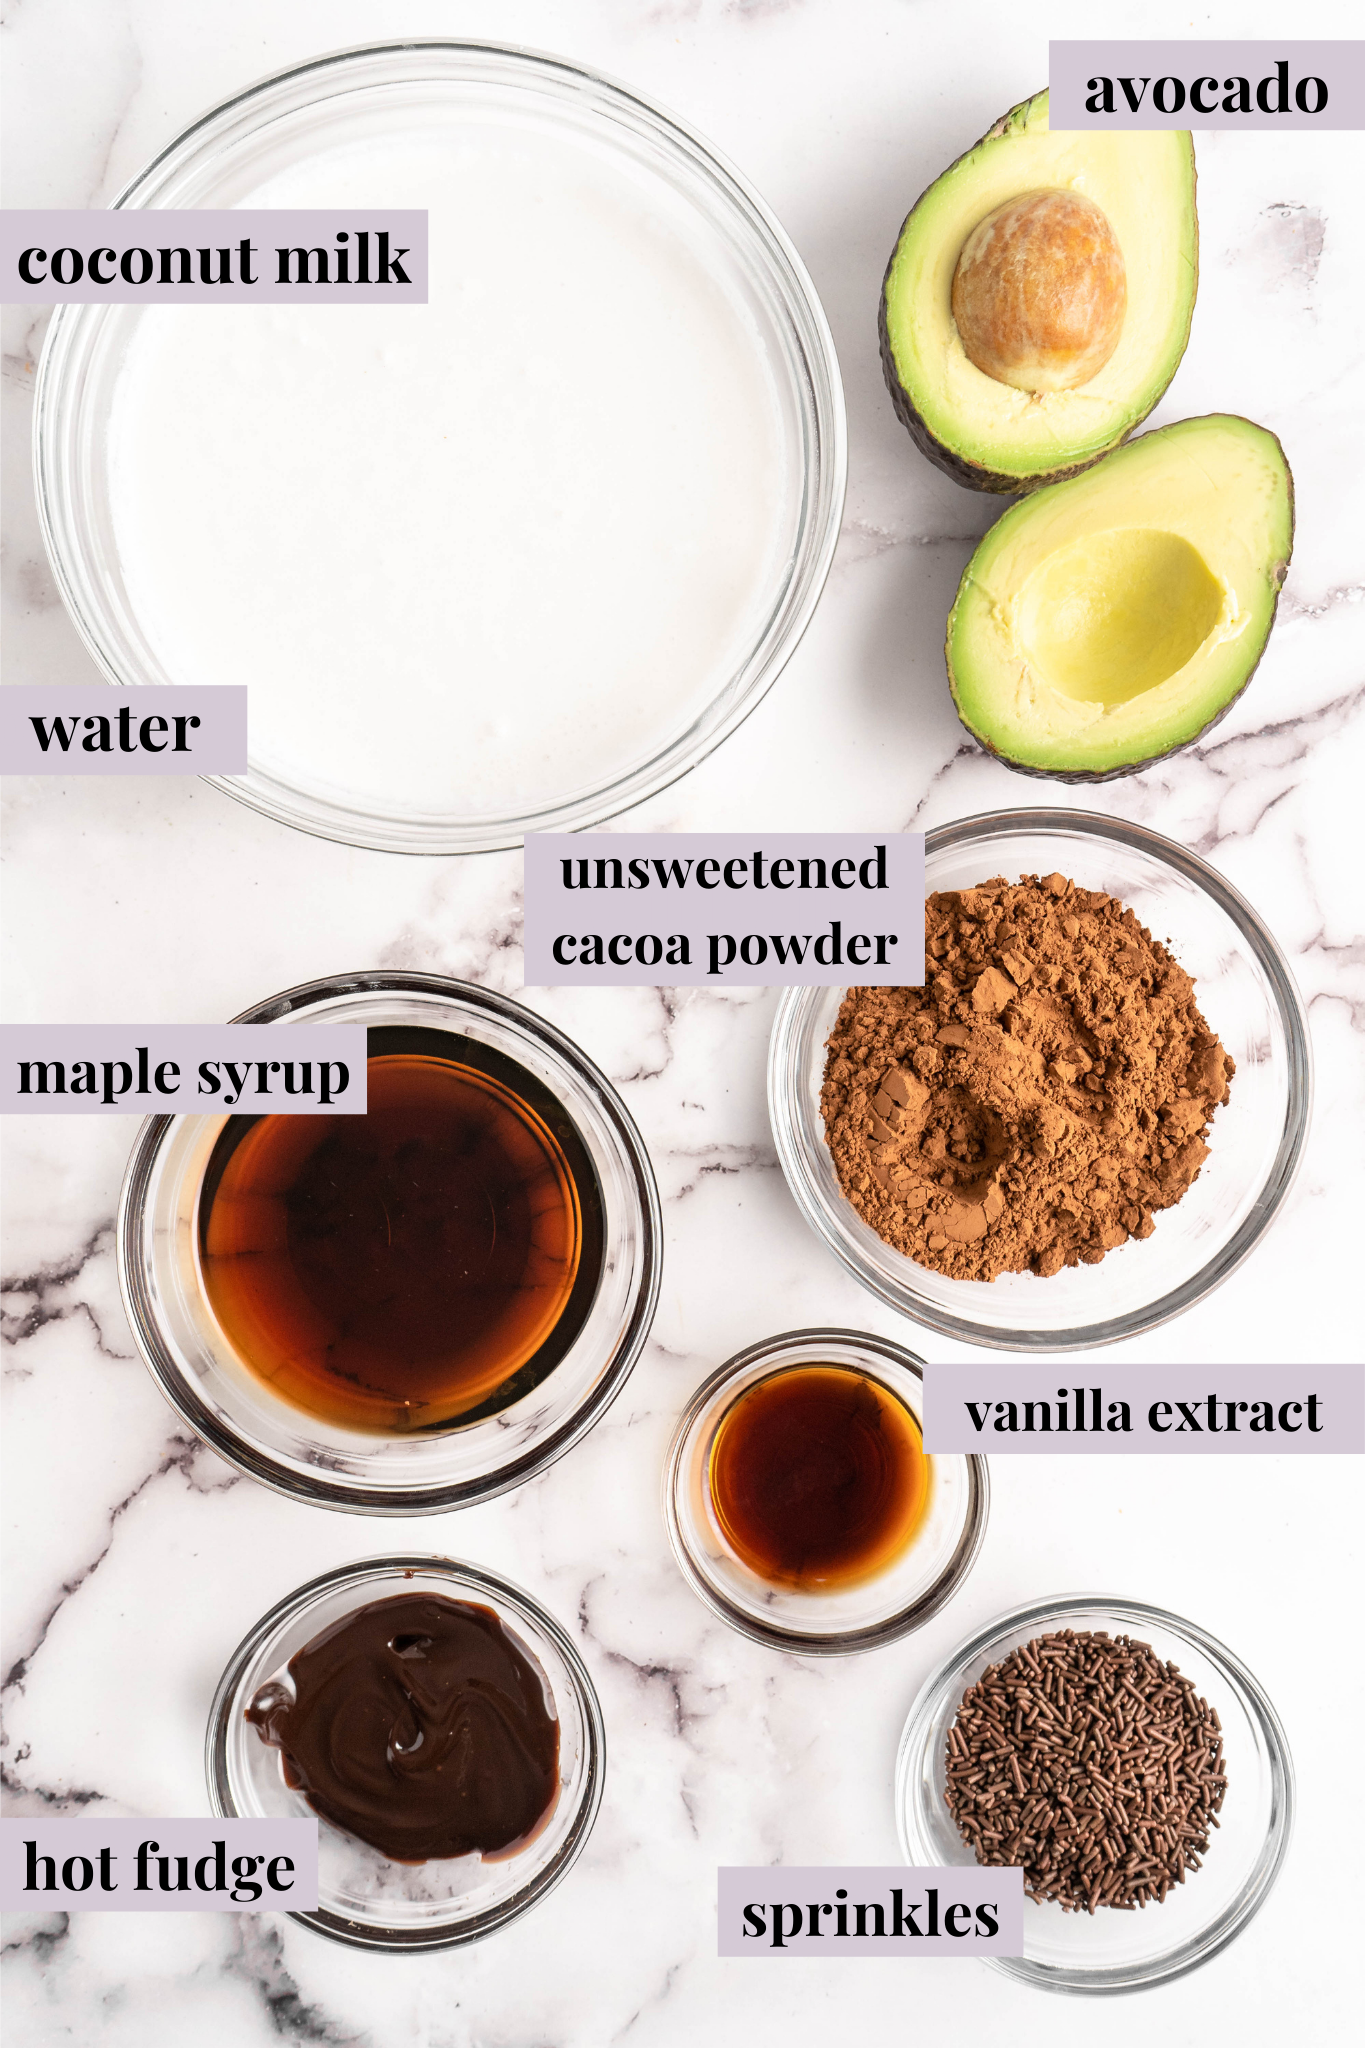 Ingredients for Chocolate Avocado Ice Cream